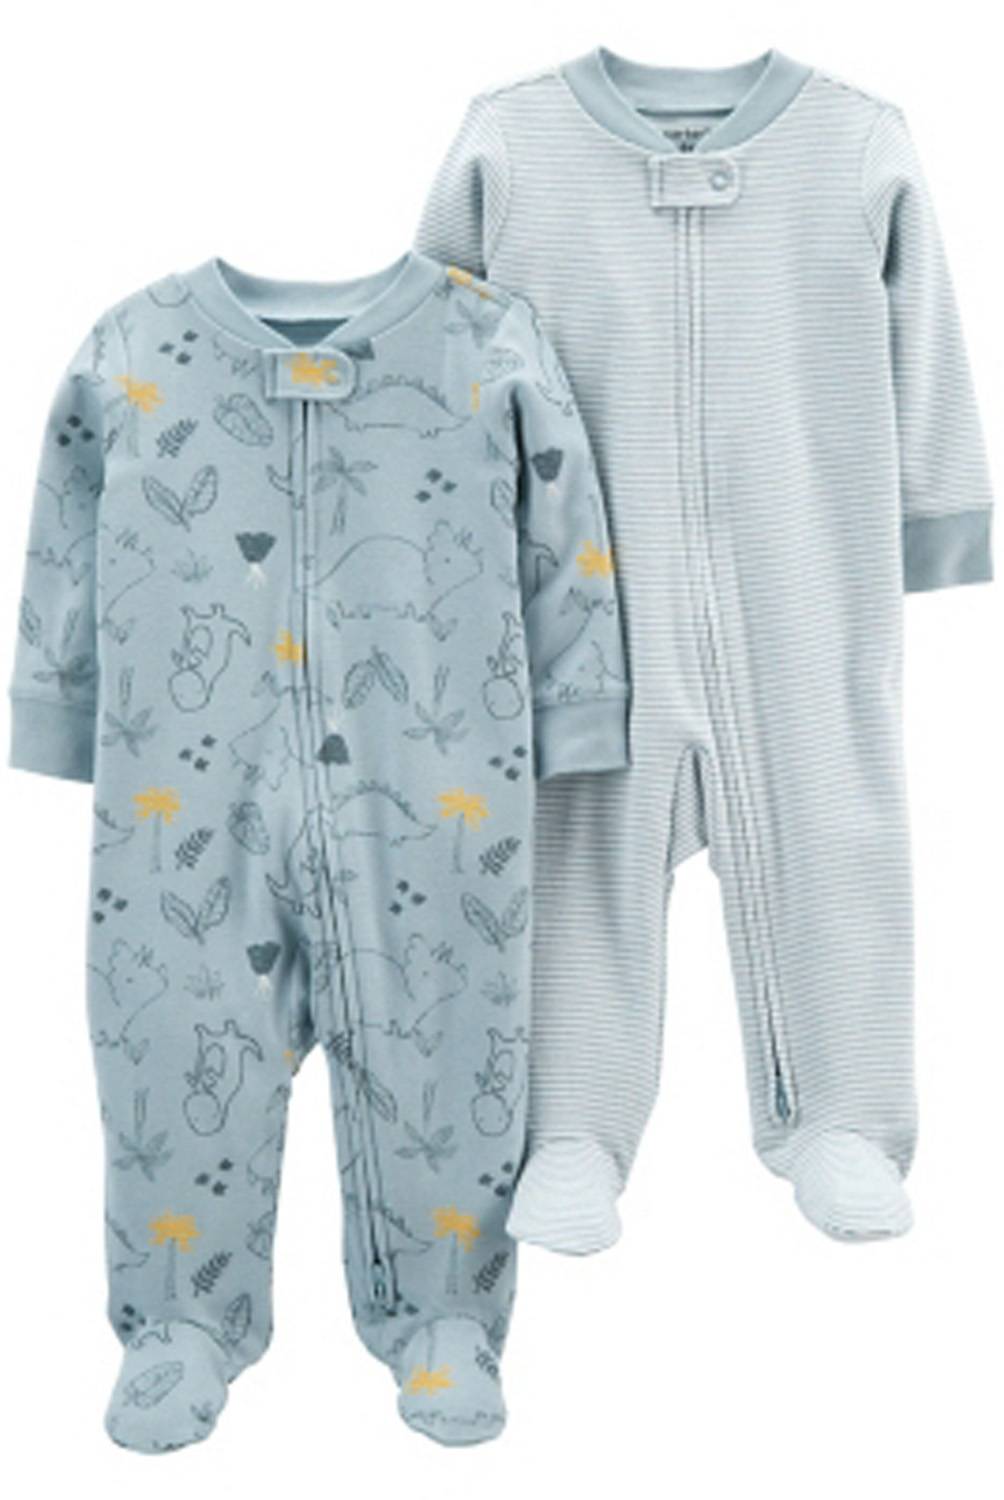 CARTER'S - Carter´s Pijama Algodón Pack 2 Unidades Bebé Niño